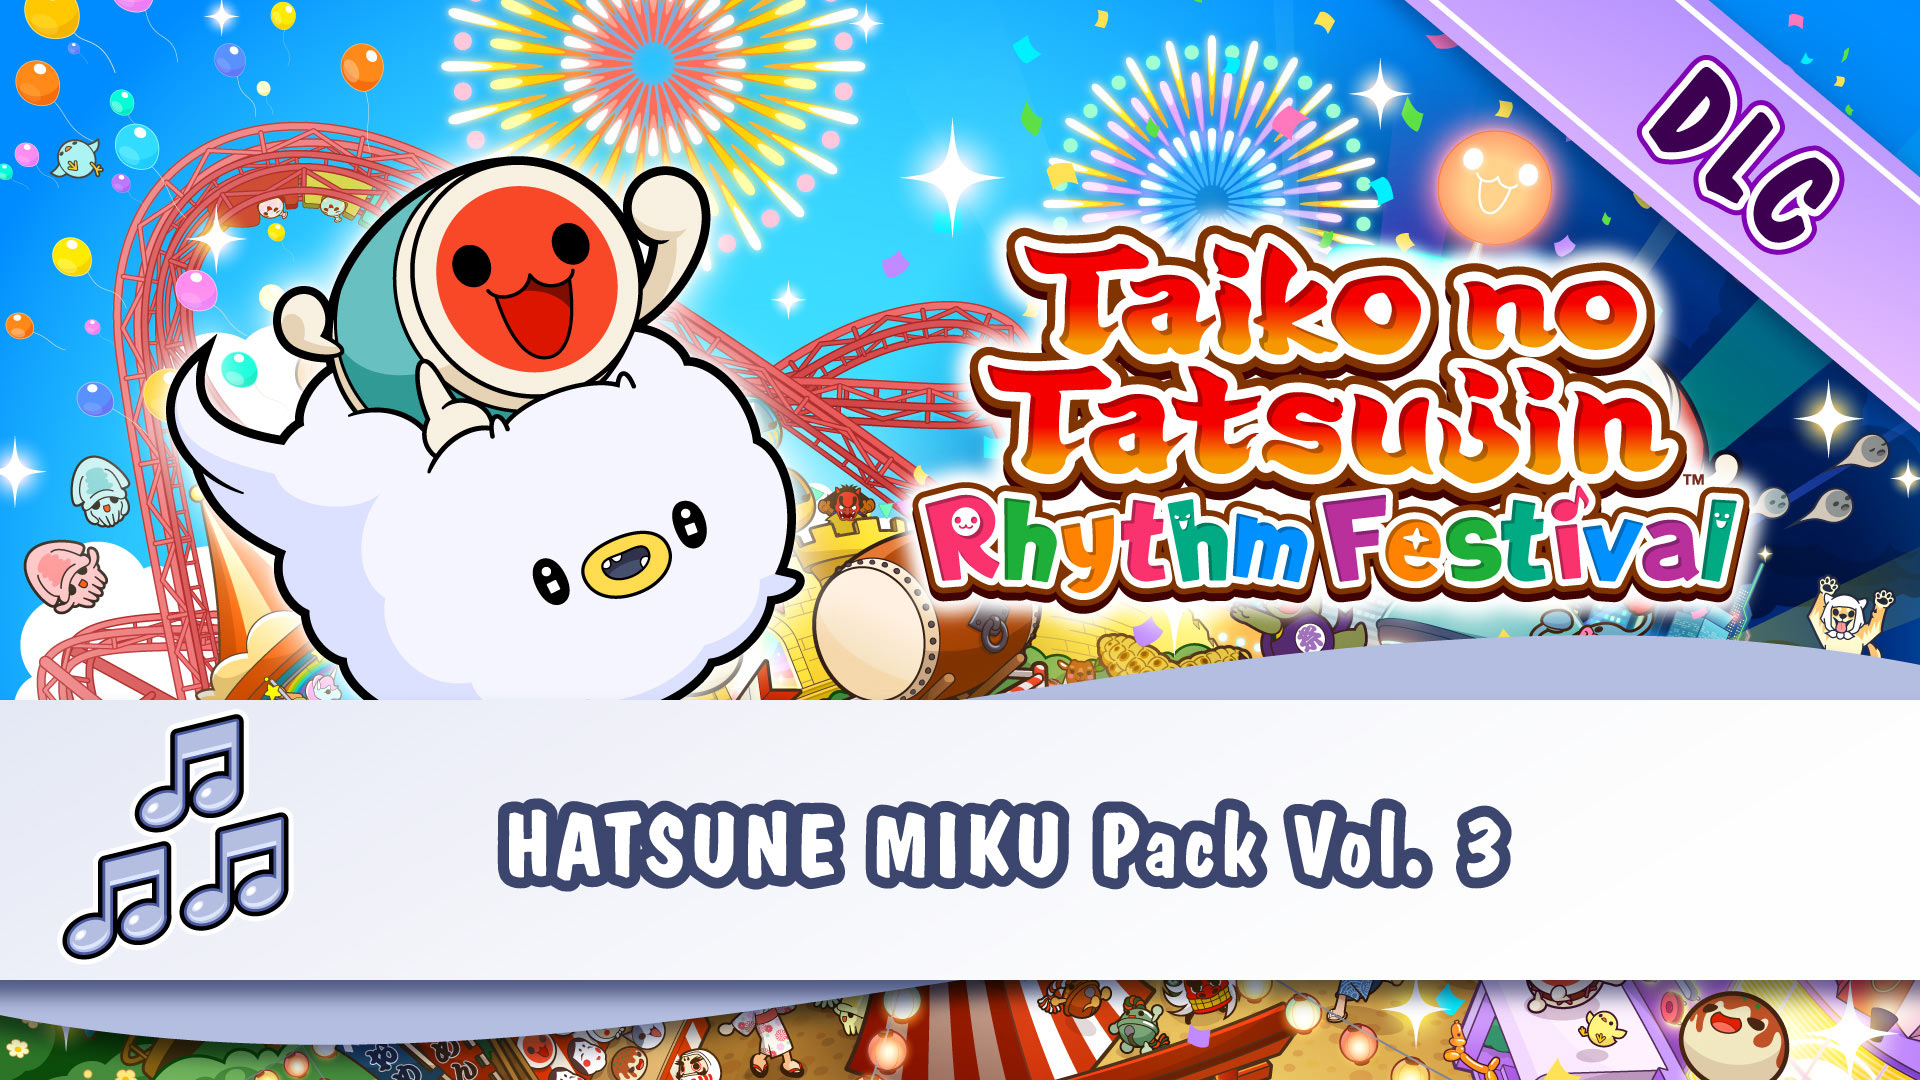 Taiko no Tatsujin: Rhythm Festival HATSUNE MIKU Pack Vol. 3